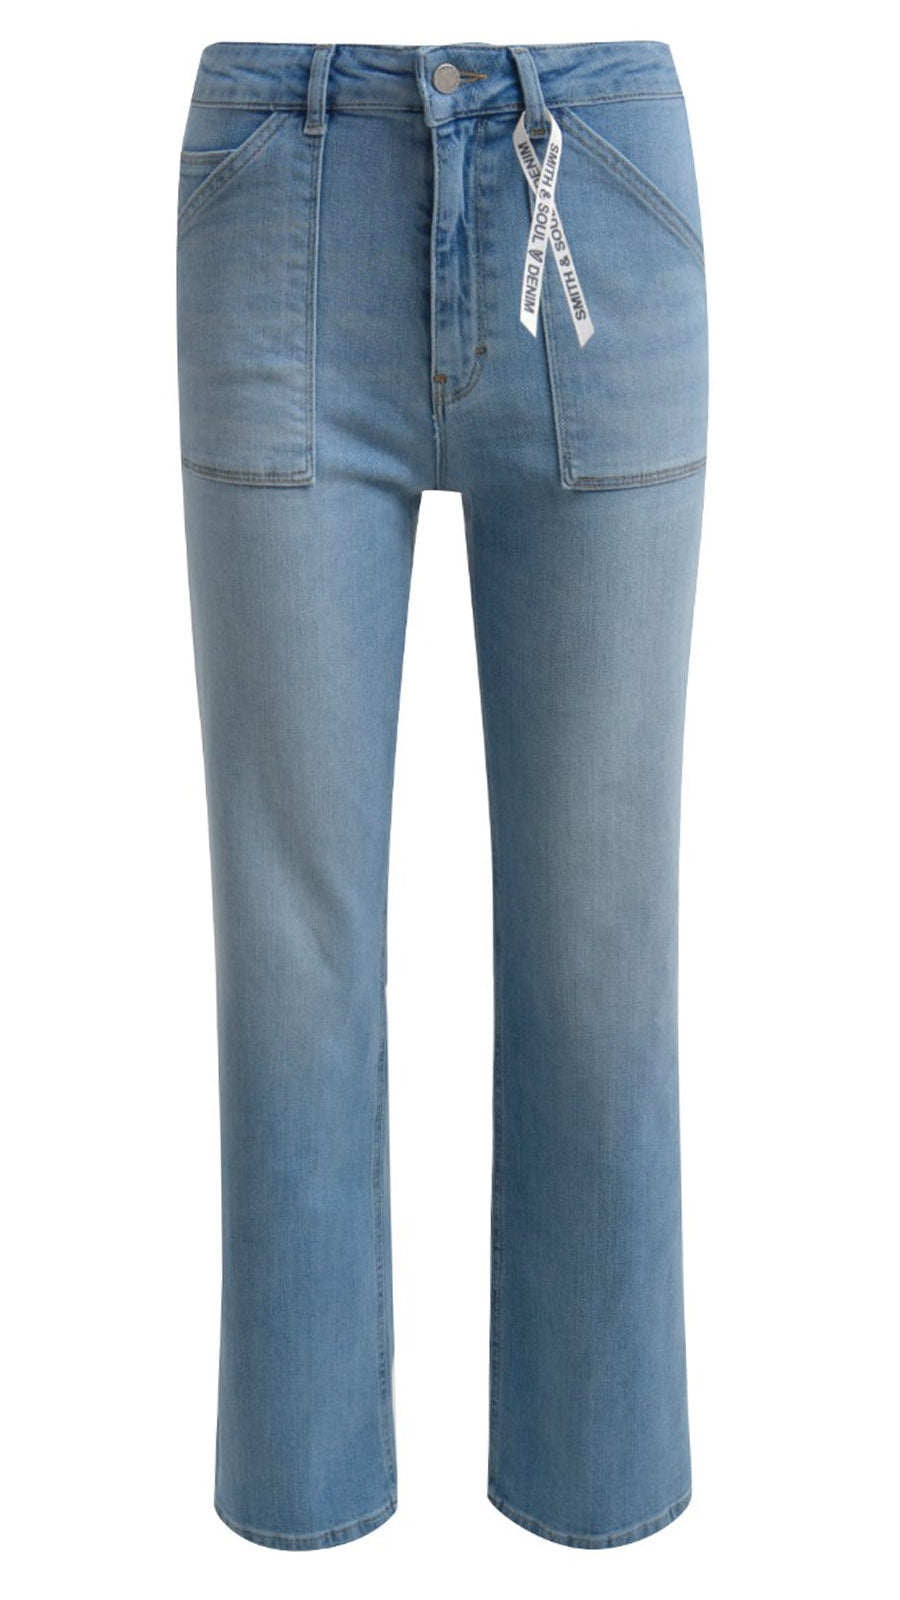 Straight-cut denim Jeans (Blue) by Smith & Soul - last 1s